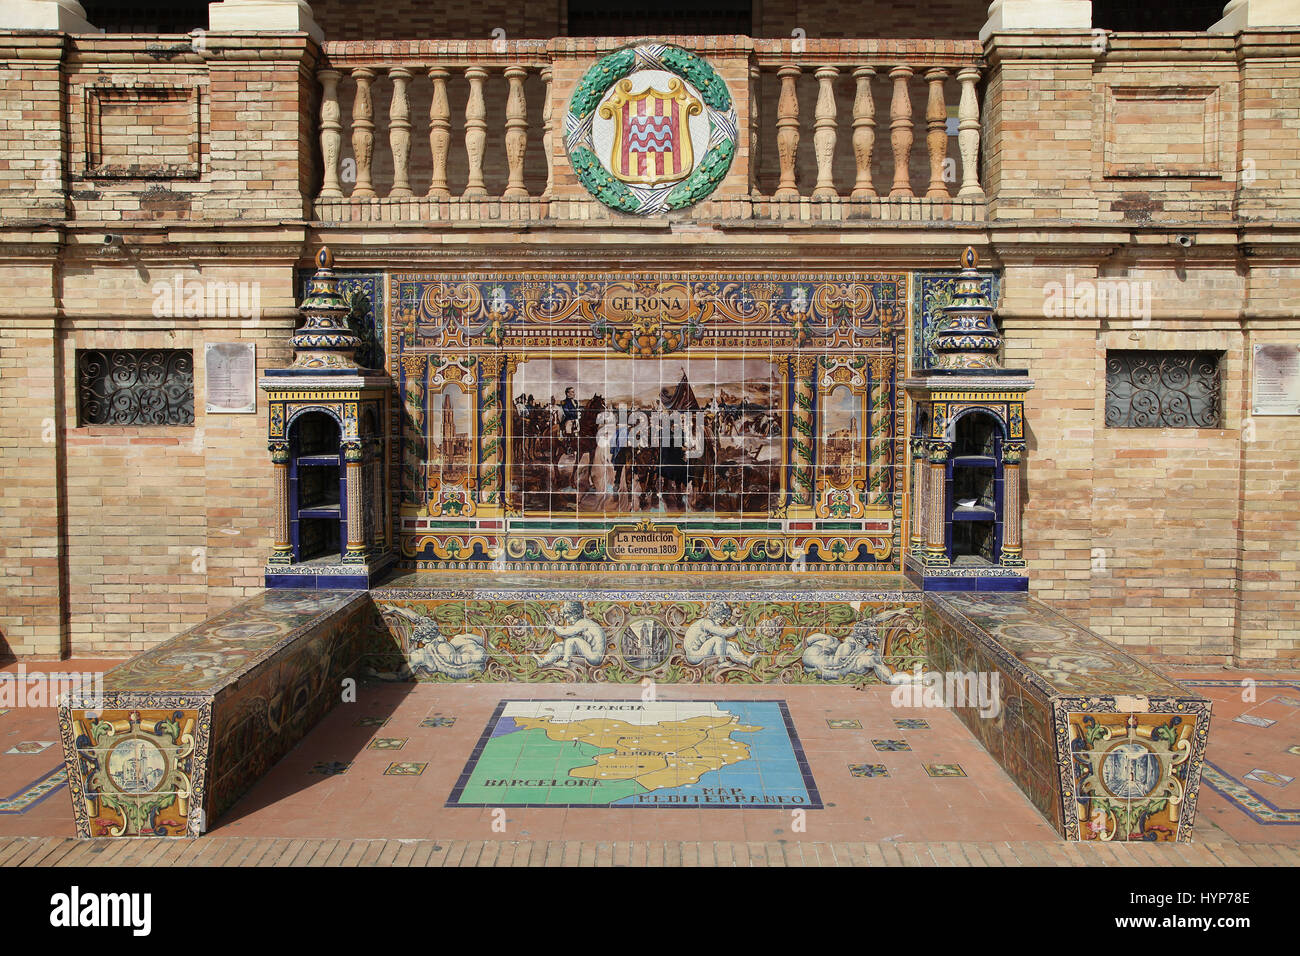 Keramische Azulejos gefliest provincial Bank oder Alkoven von Gerona auf der Plaza de España in Parque de Maria Luisa Sevilla Sevilla Spanien Stockfoto